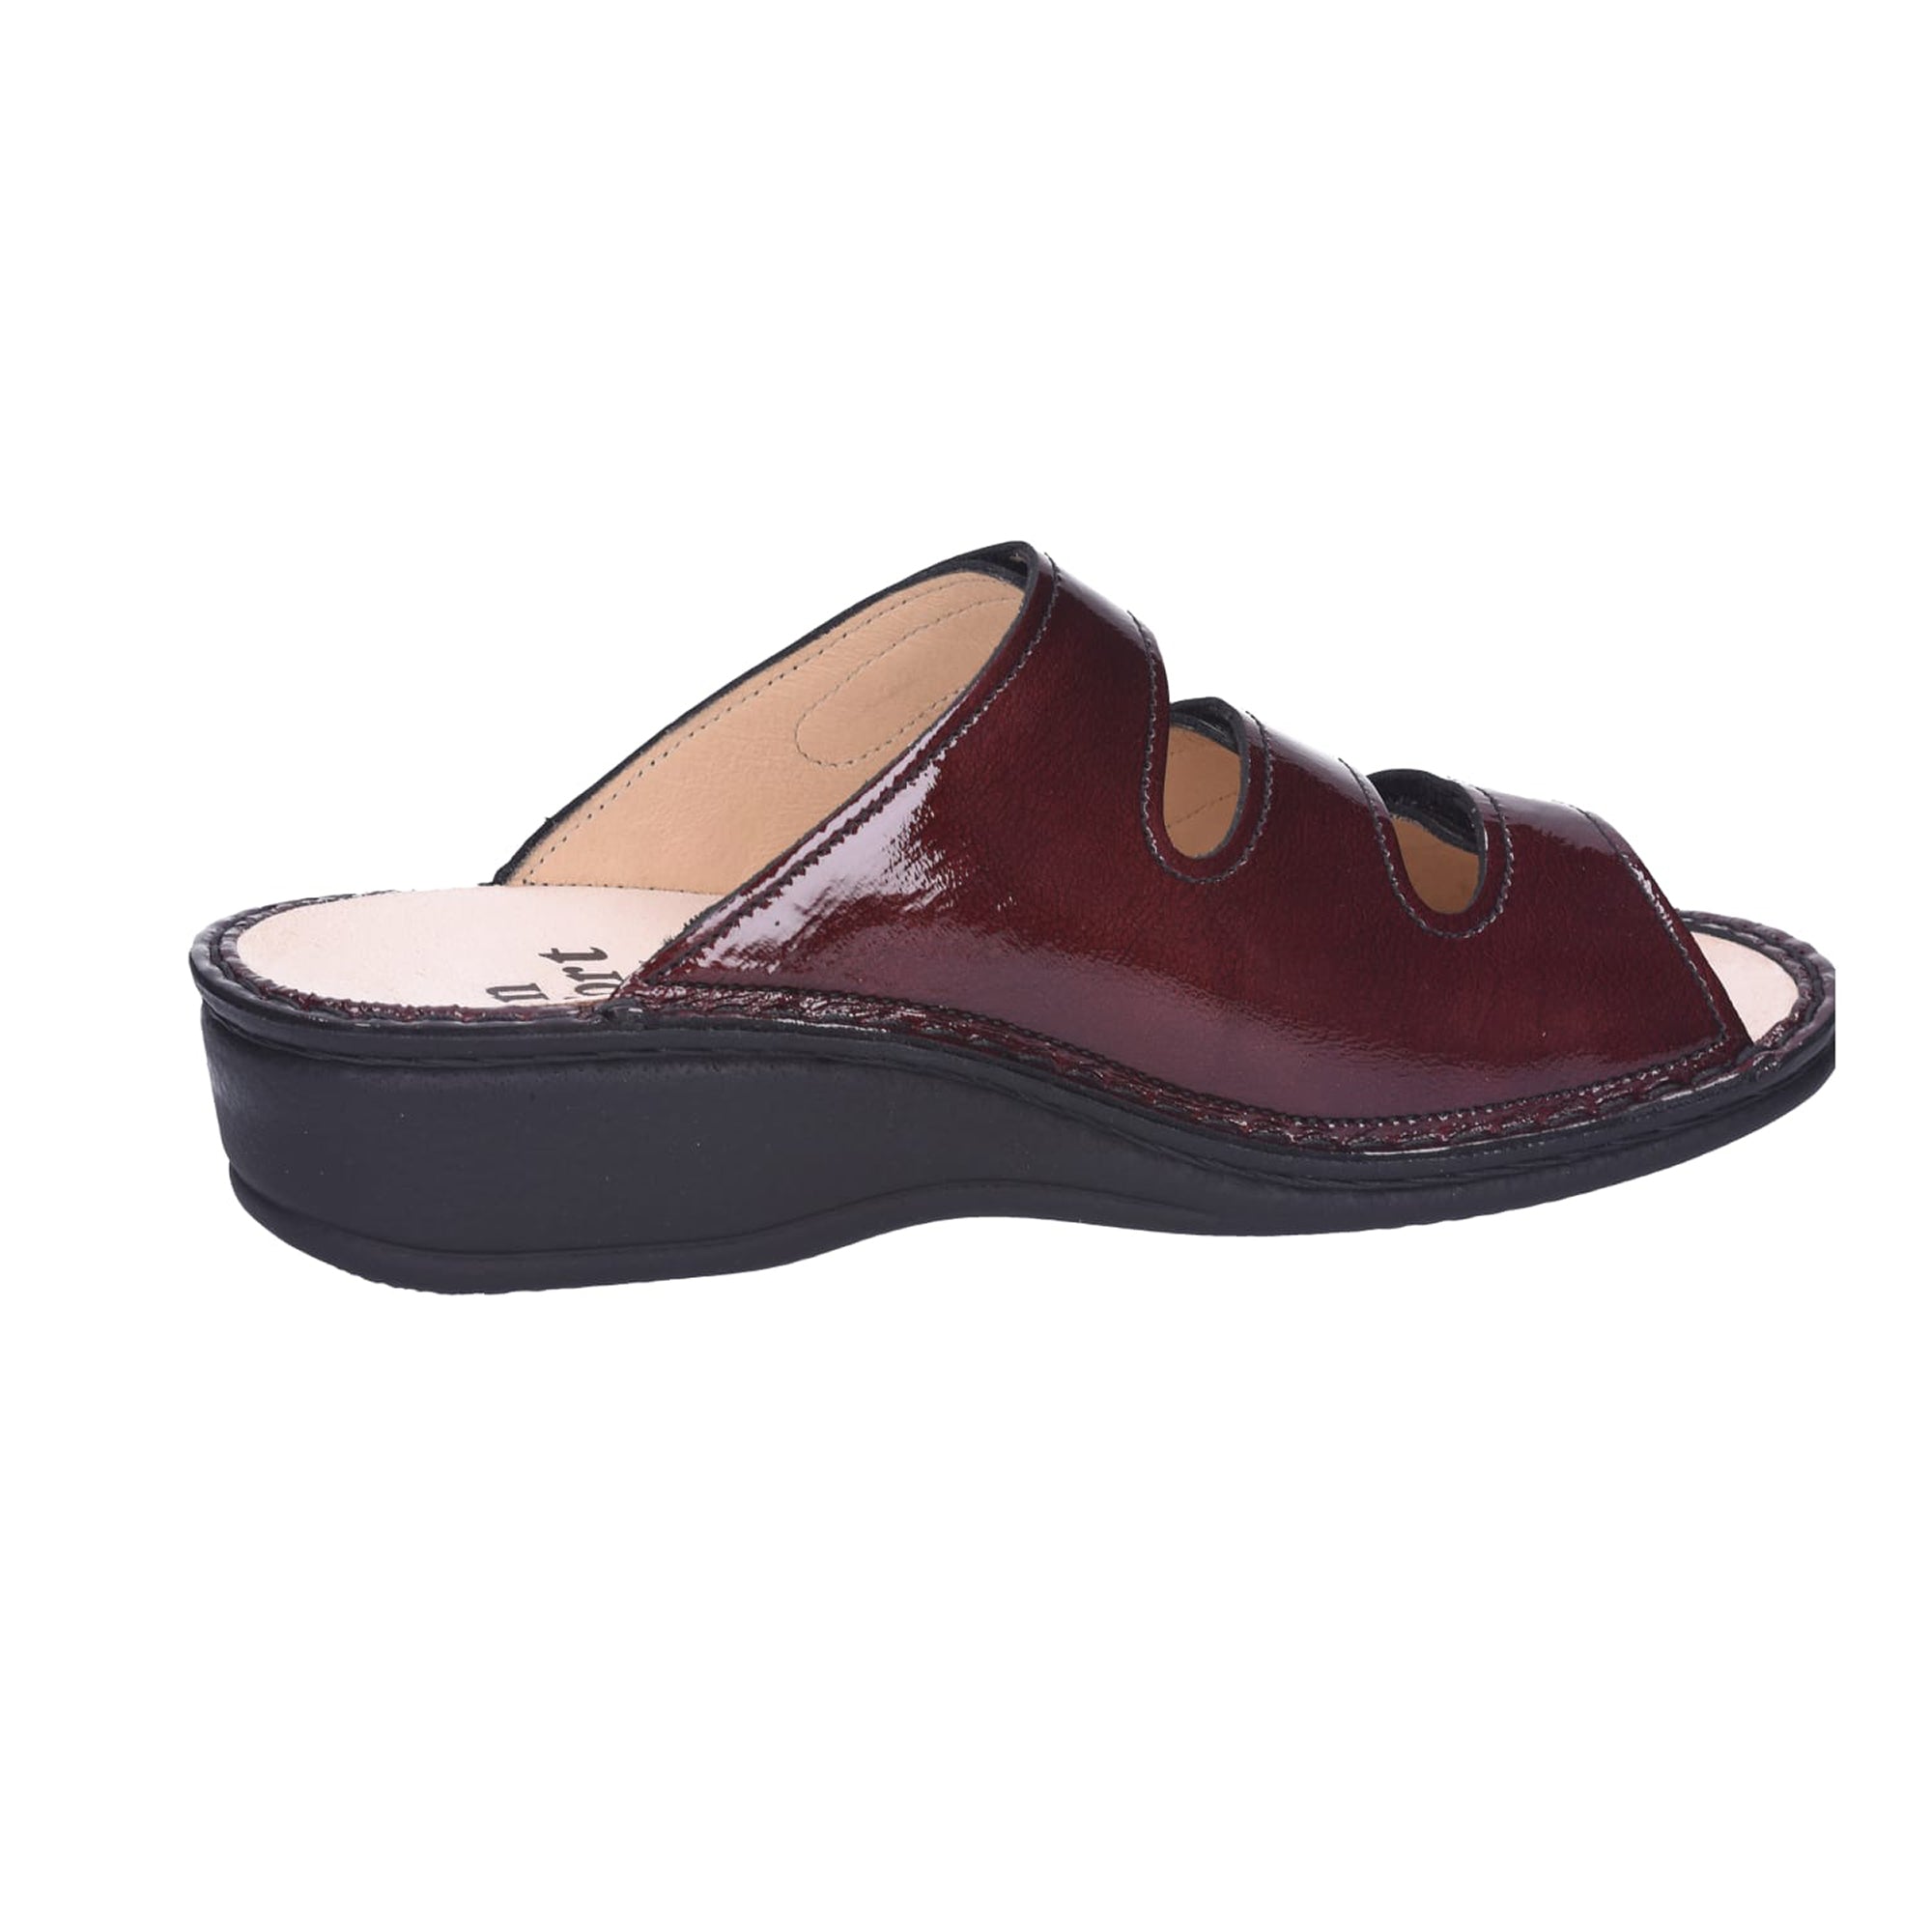 Finn Comfort Pisa Women's Red Sandals - Stylish & Comfortable